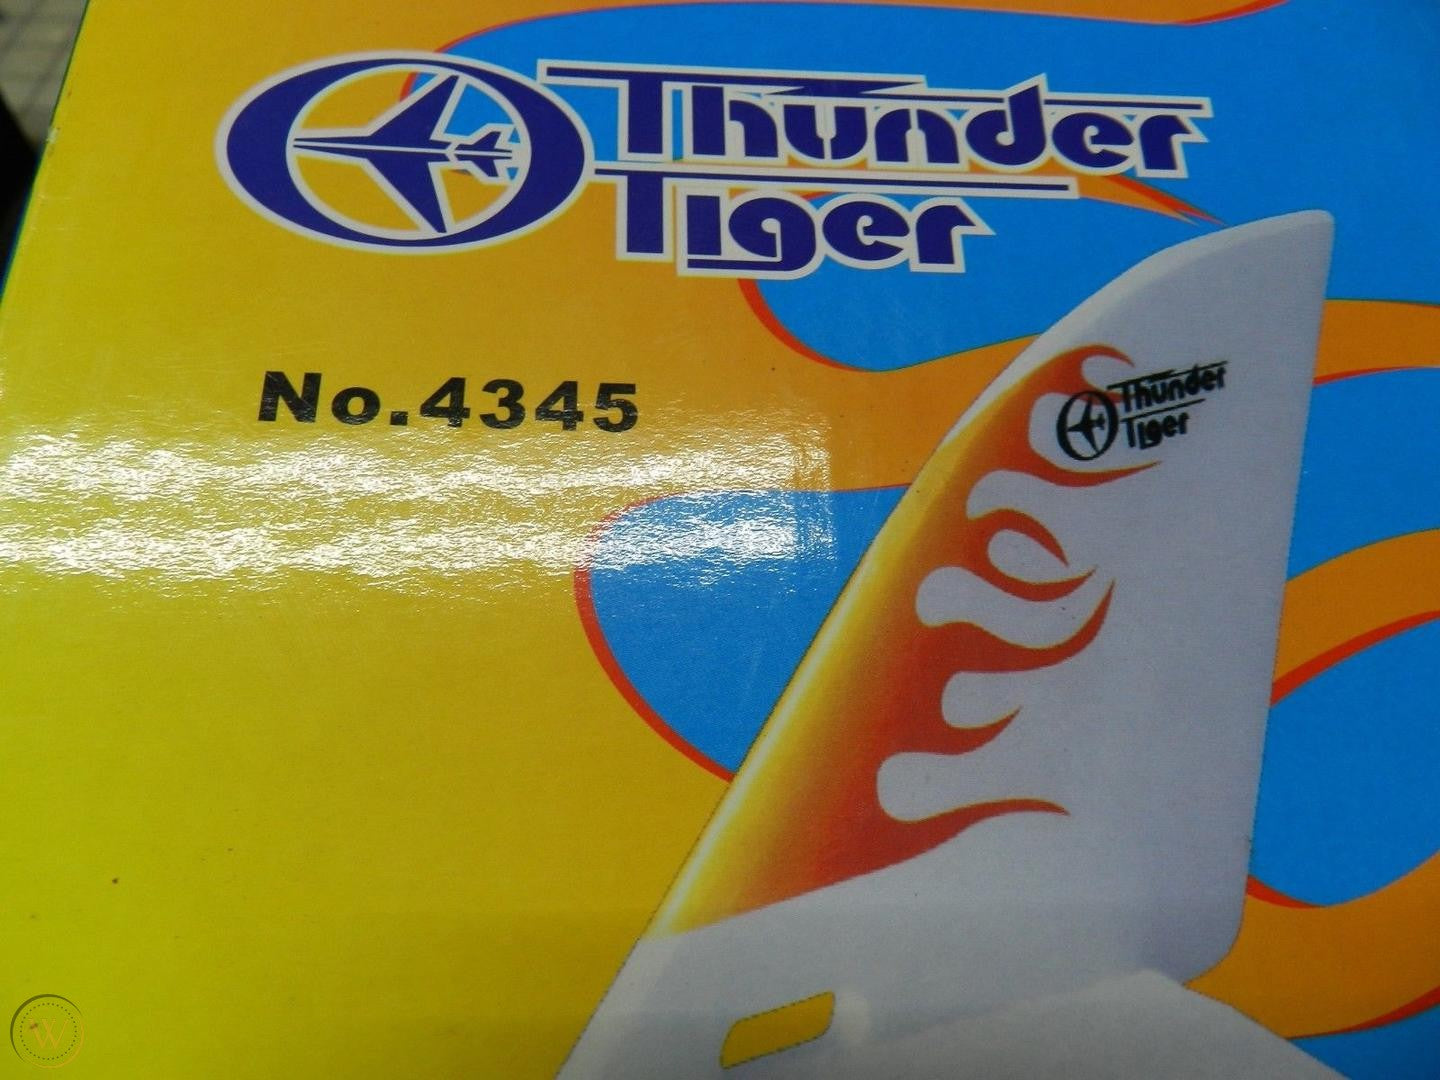 Thunder Tiger Velocity Ii Plane - Rc